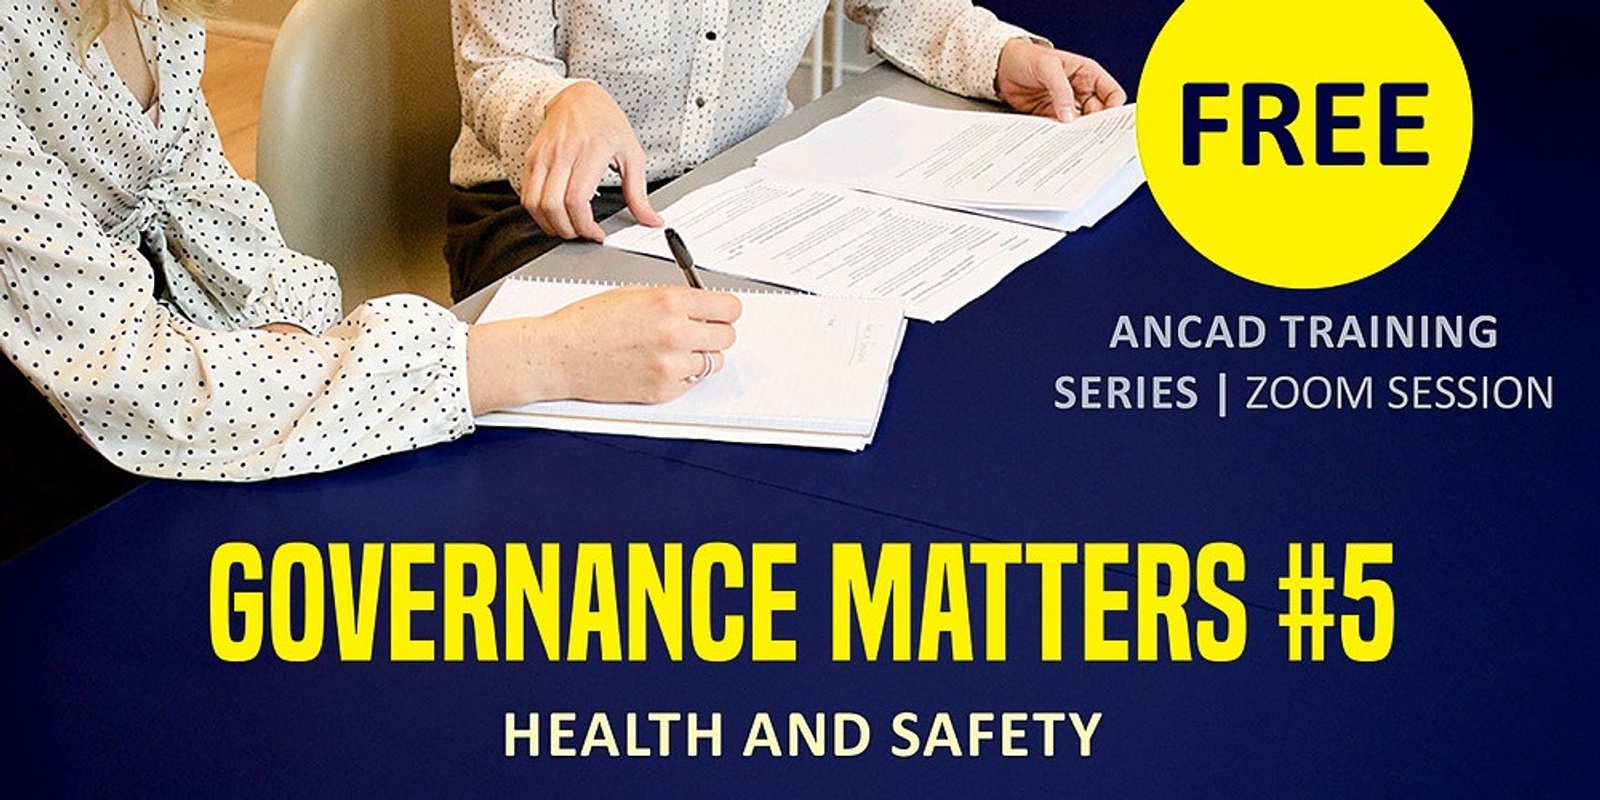 Banner image for GOVERNANCE MATTERS #5: Health & Safety